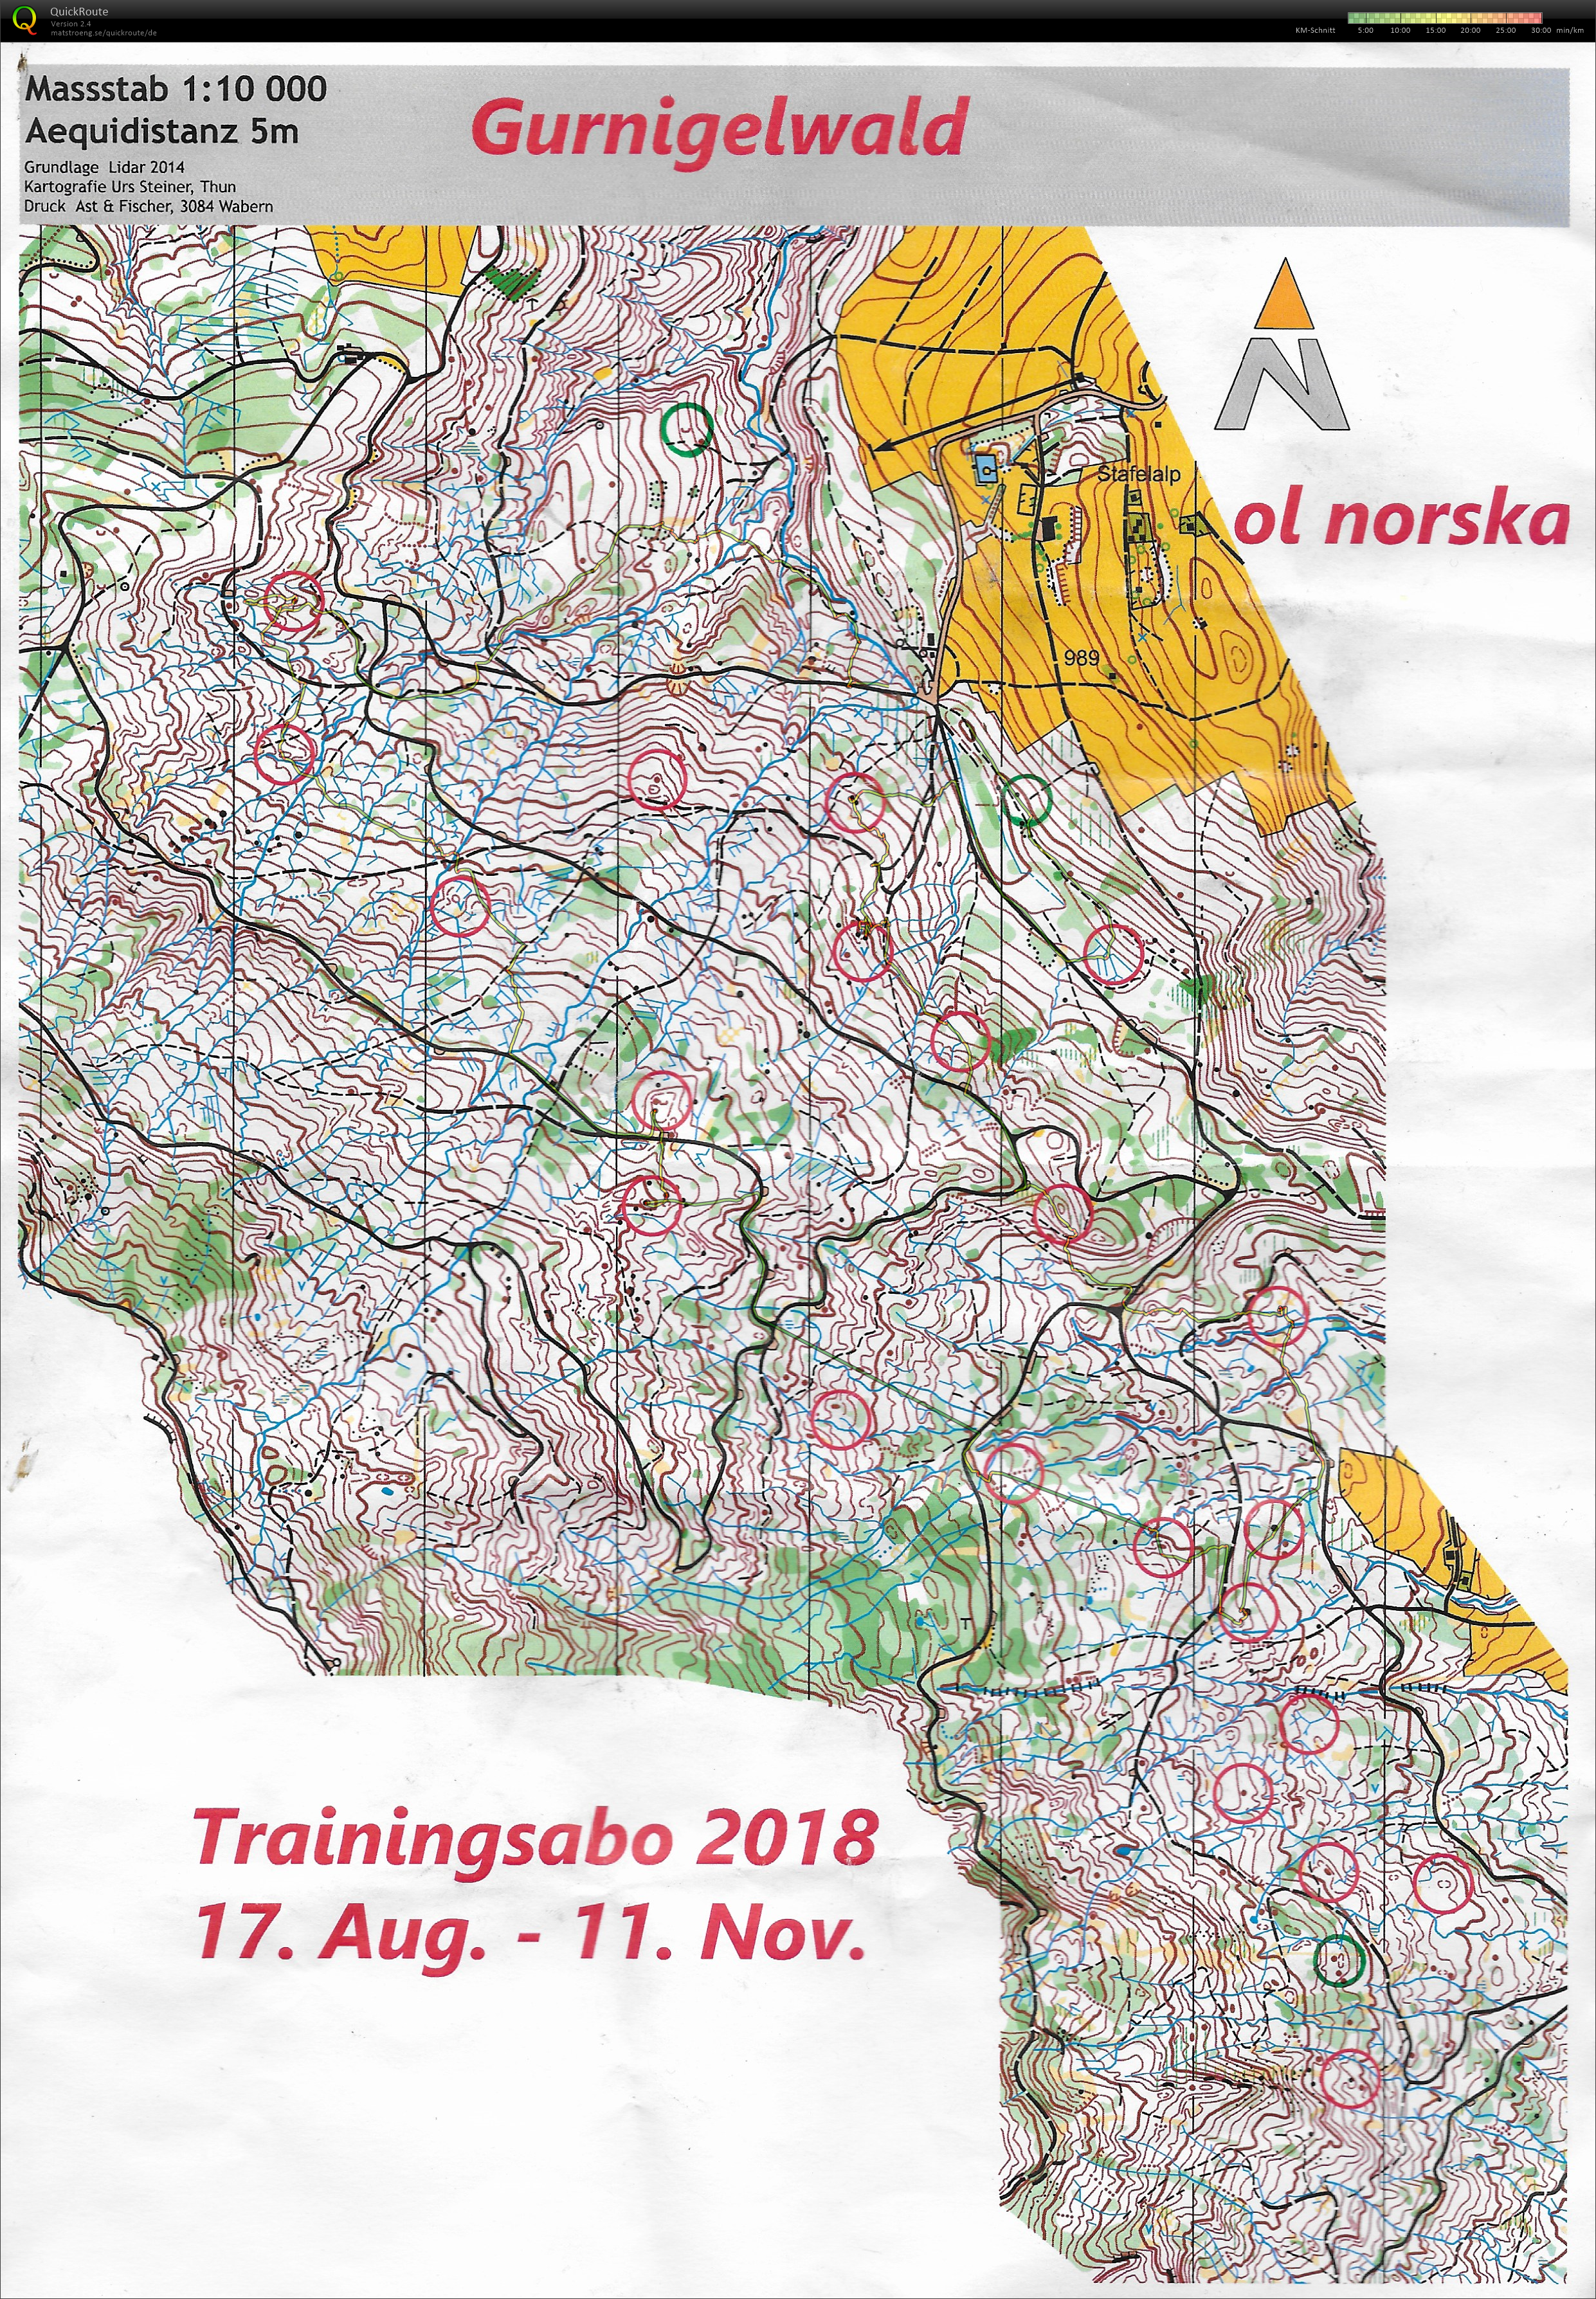 Trainingsabo Gurnigelwald (02.09.2018)